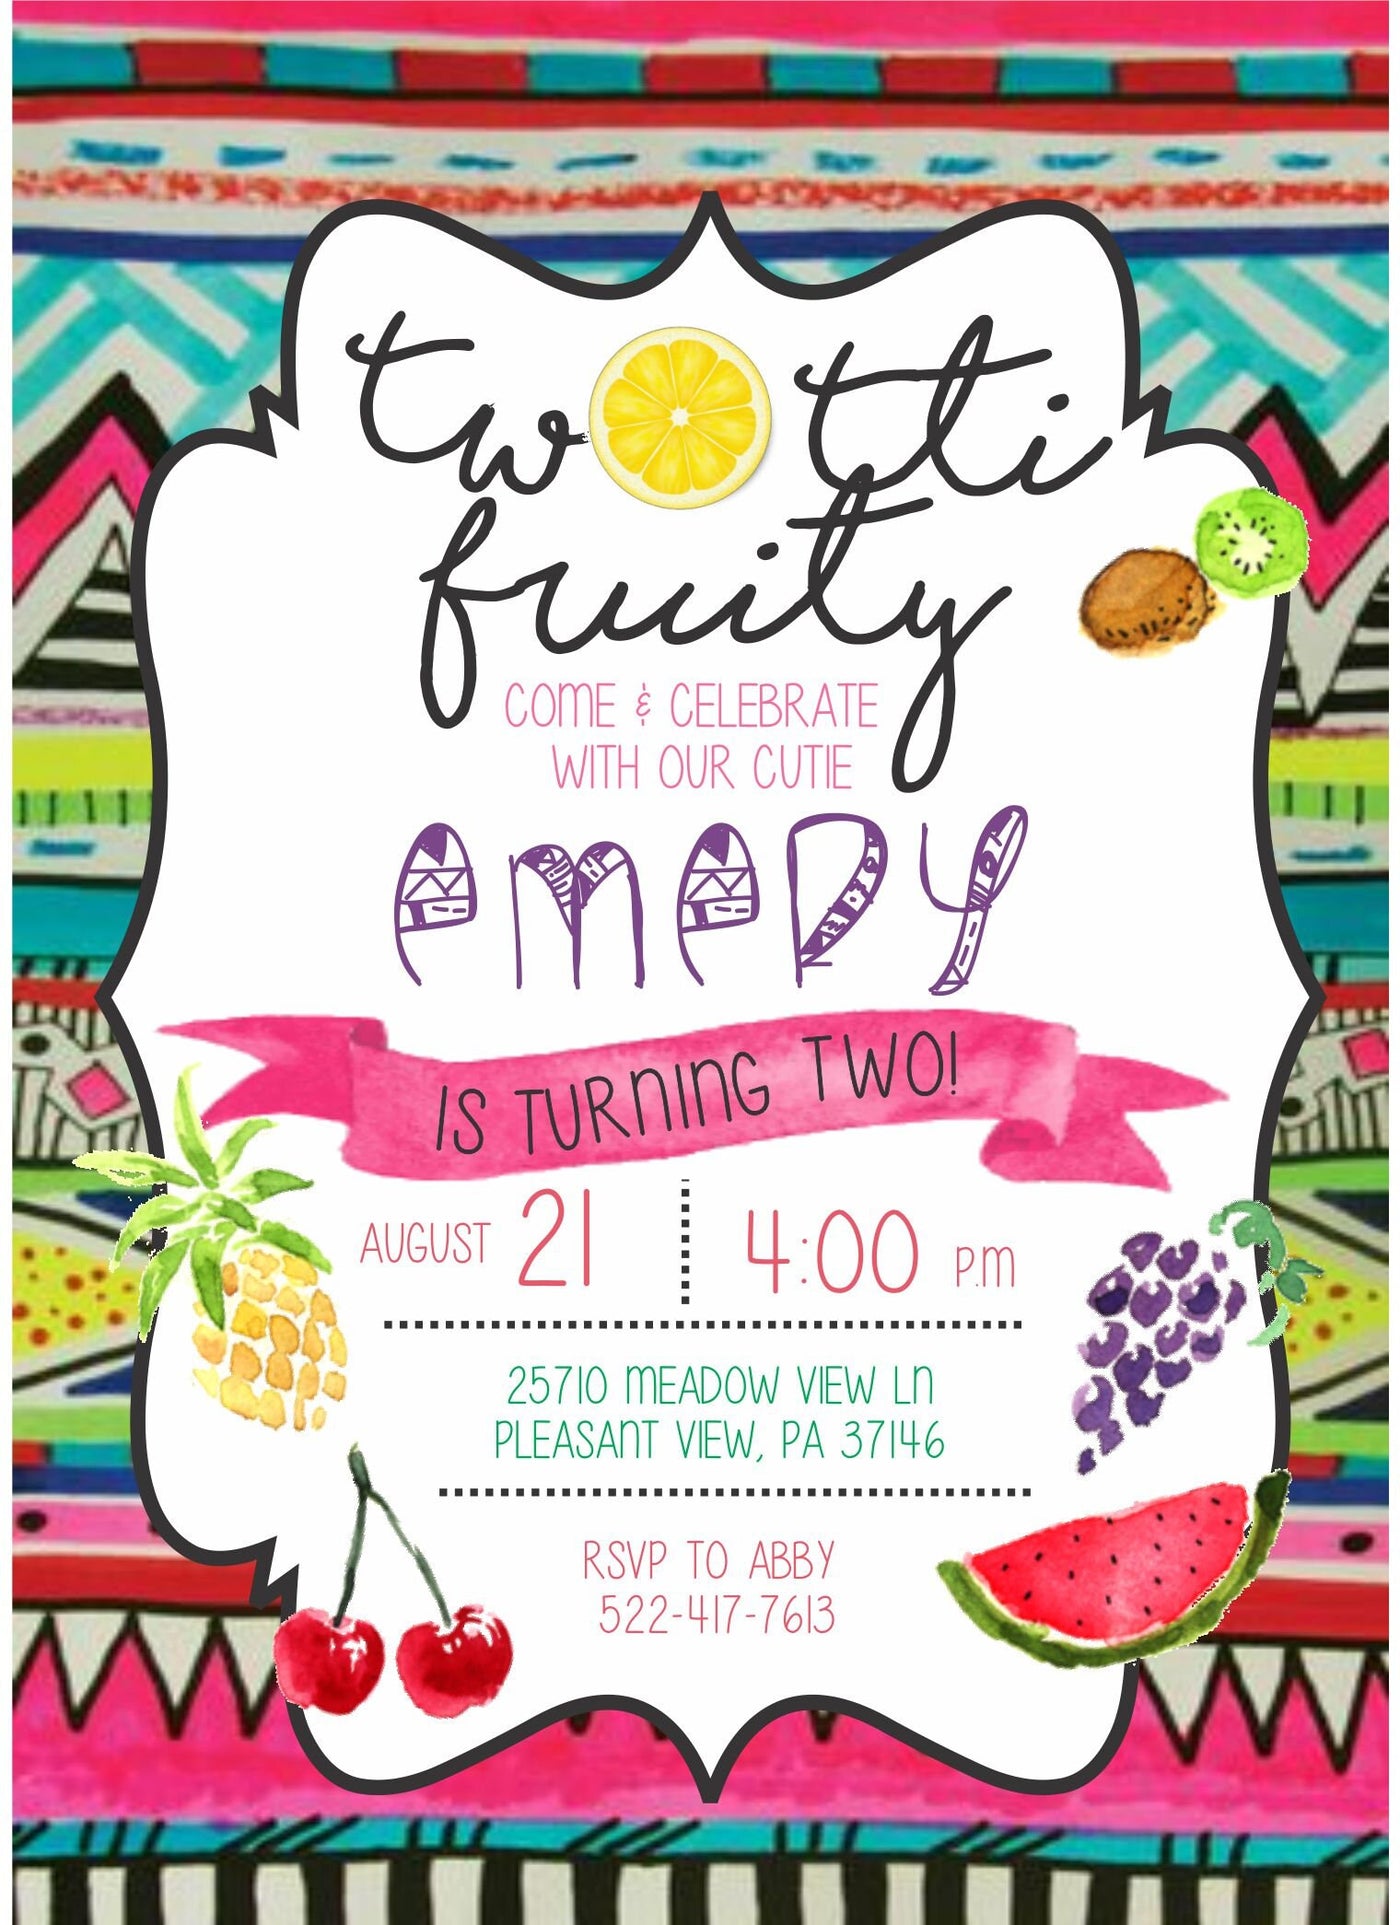 Tutti Frutti Party, Two-Tti Fruity Birthday Invite, Twotti Frutti Invitation, Twotti Fruitti Birthday, Second Birthday, Summer Birthday